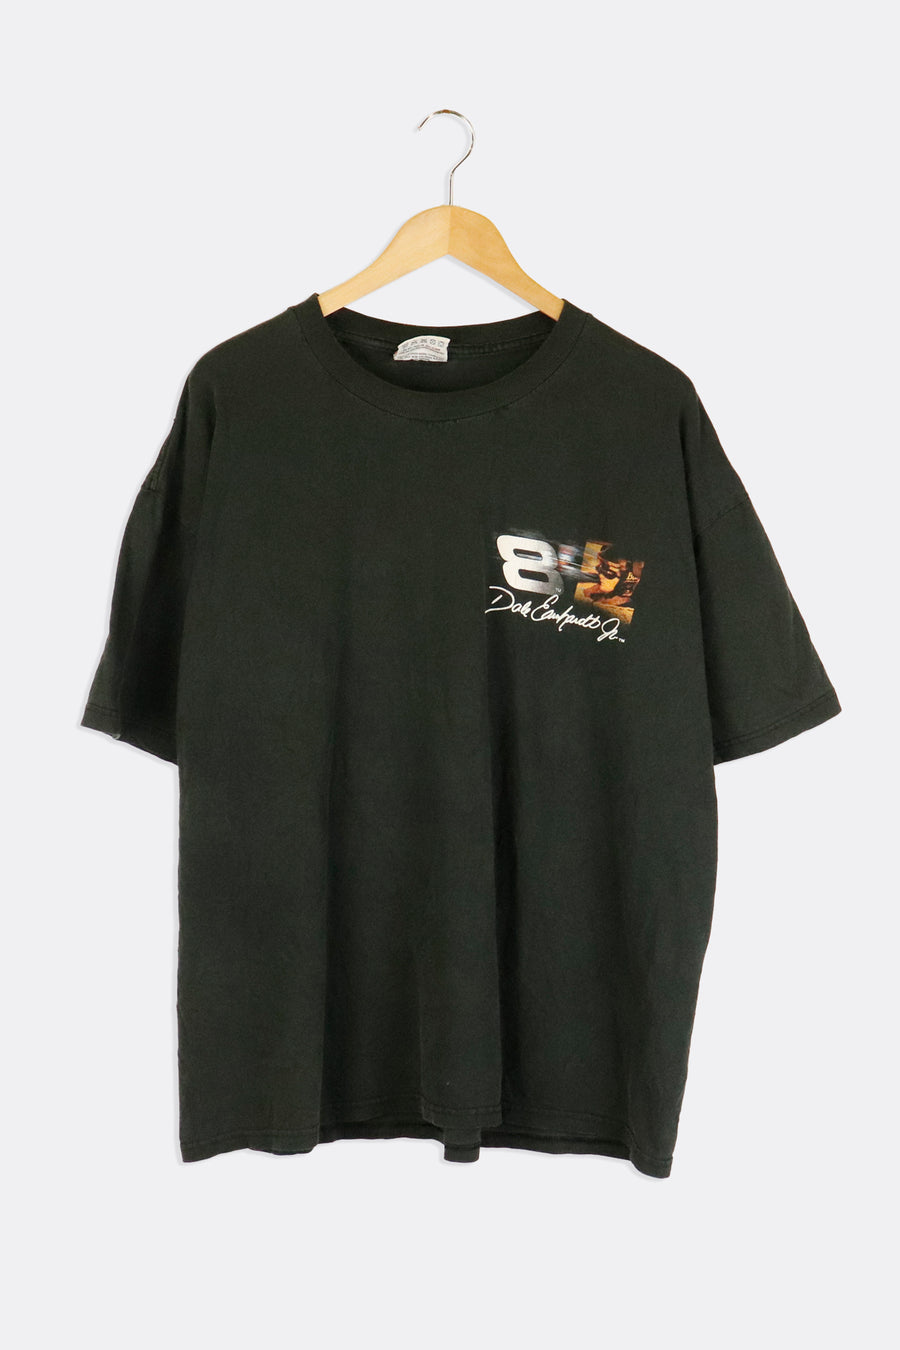 Vintage 2000 Nascar Dale Earnhardt Jr 8 Budweiser Sponsor Vinyl T Shirt Sz XL